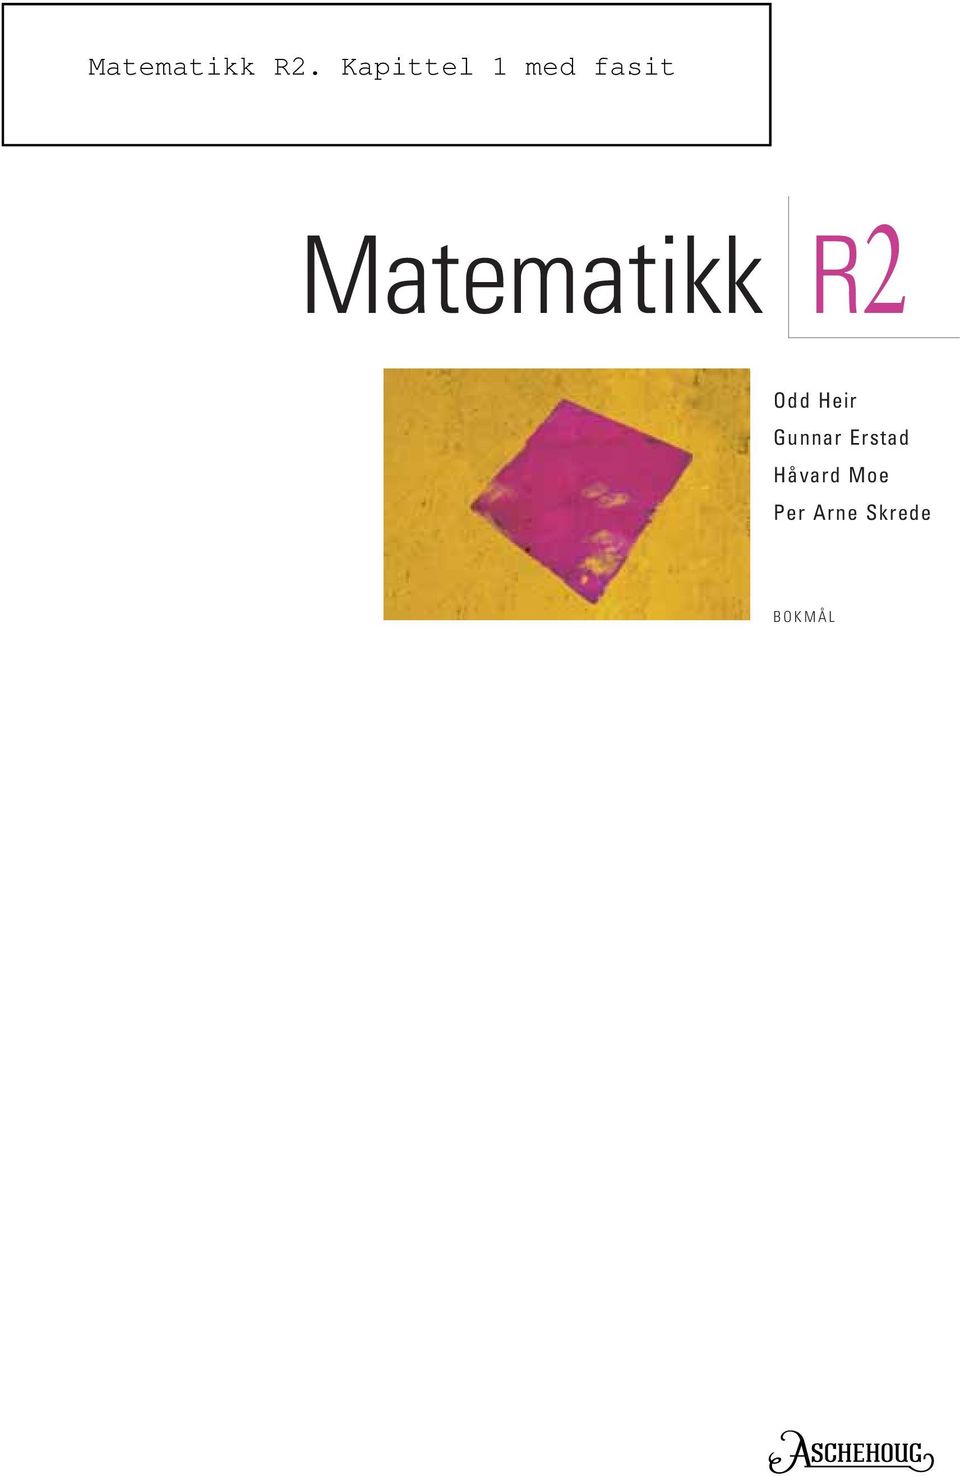 Matematikk R2. Odd Heir Gunnar Erstad Håvard Moe Per Arne Skrede BOKMÅL -  PDF Free Download